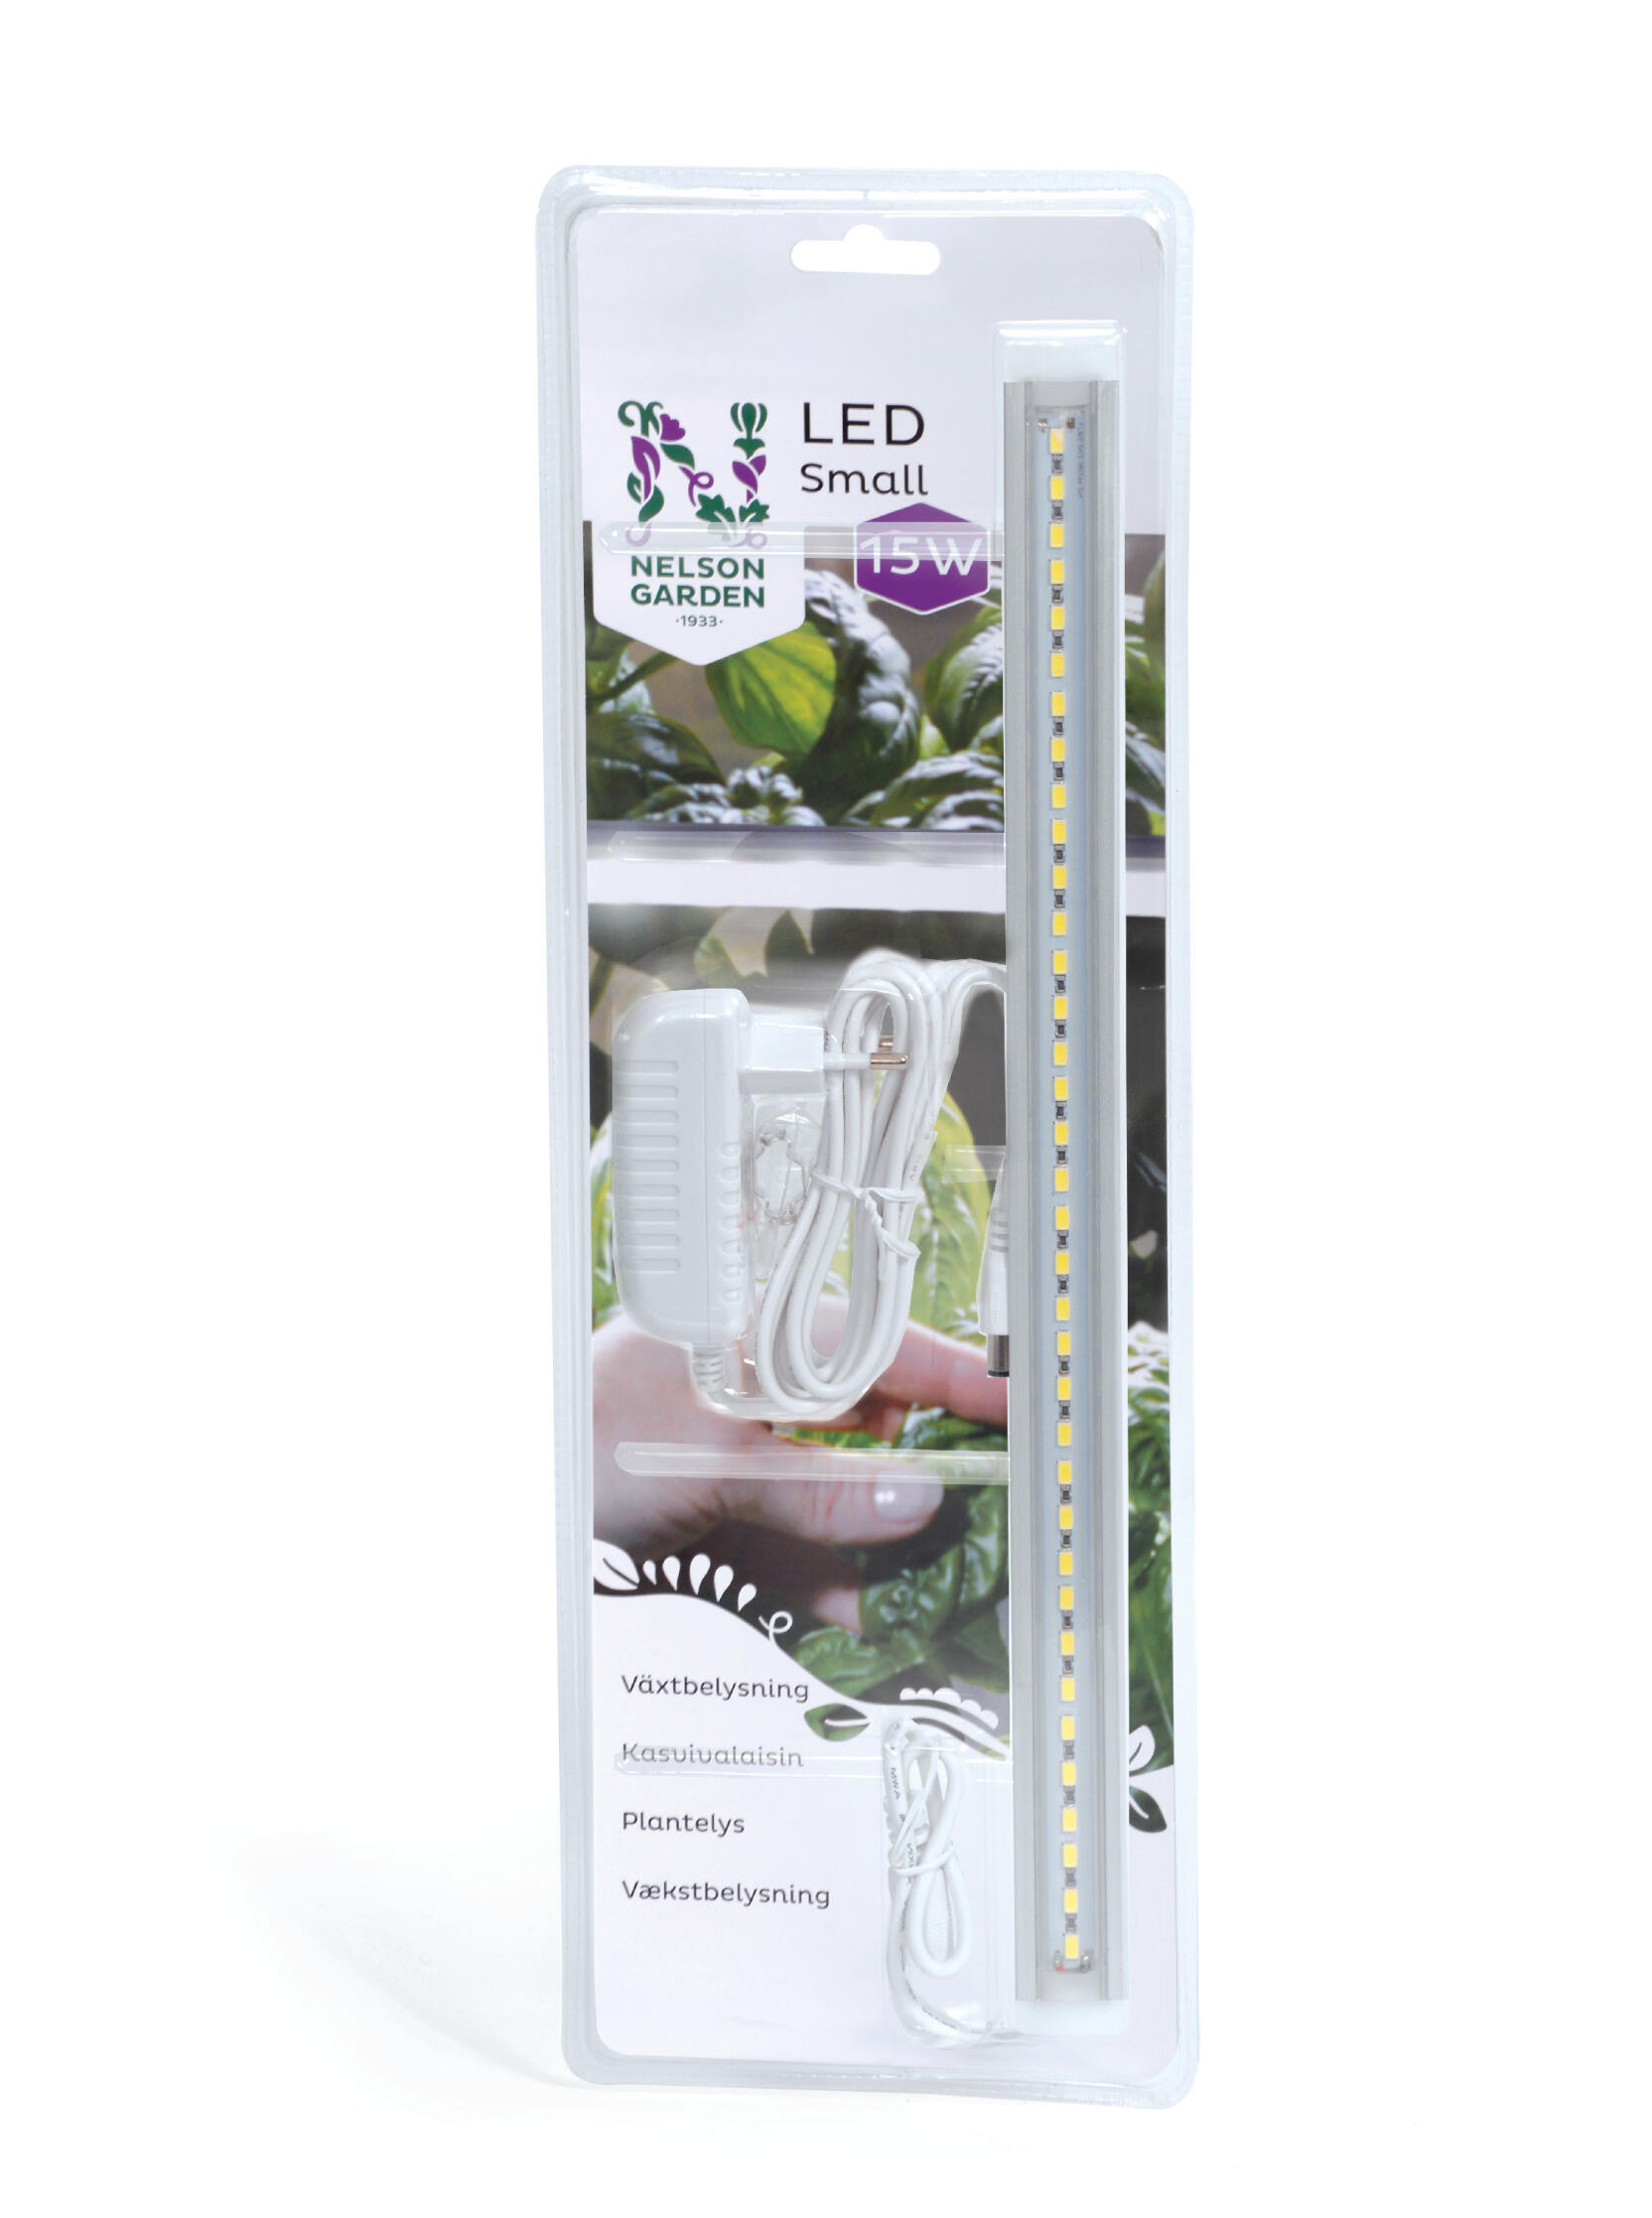 Plantelys LED-List Adapter Small 15W39cm Nelson Garden